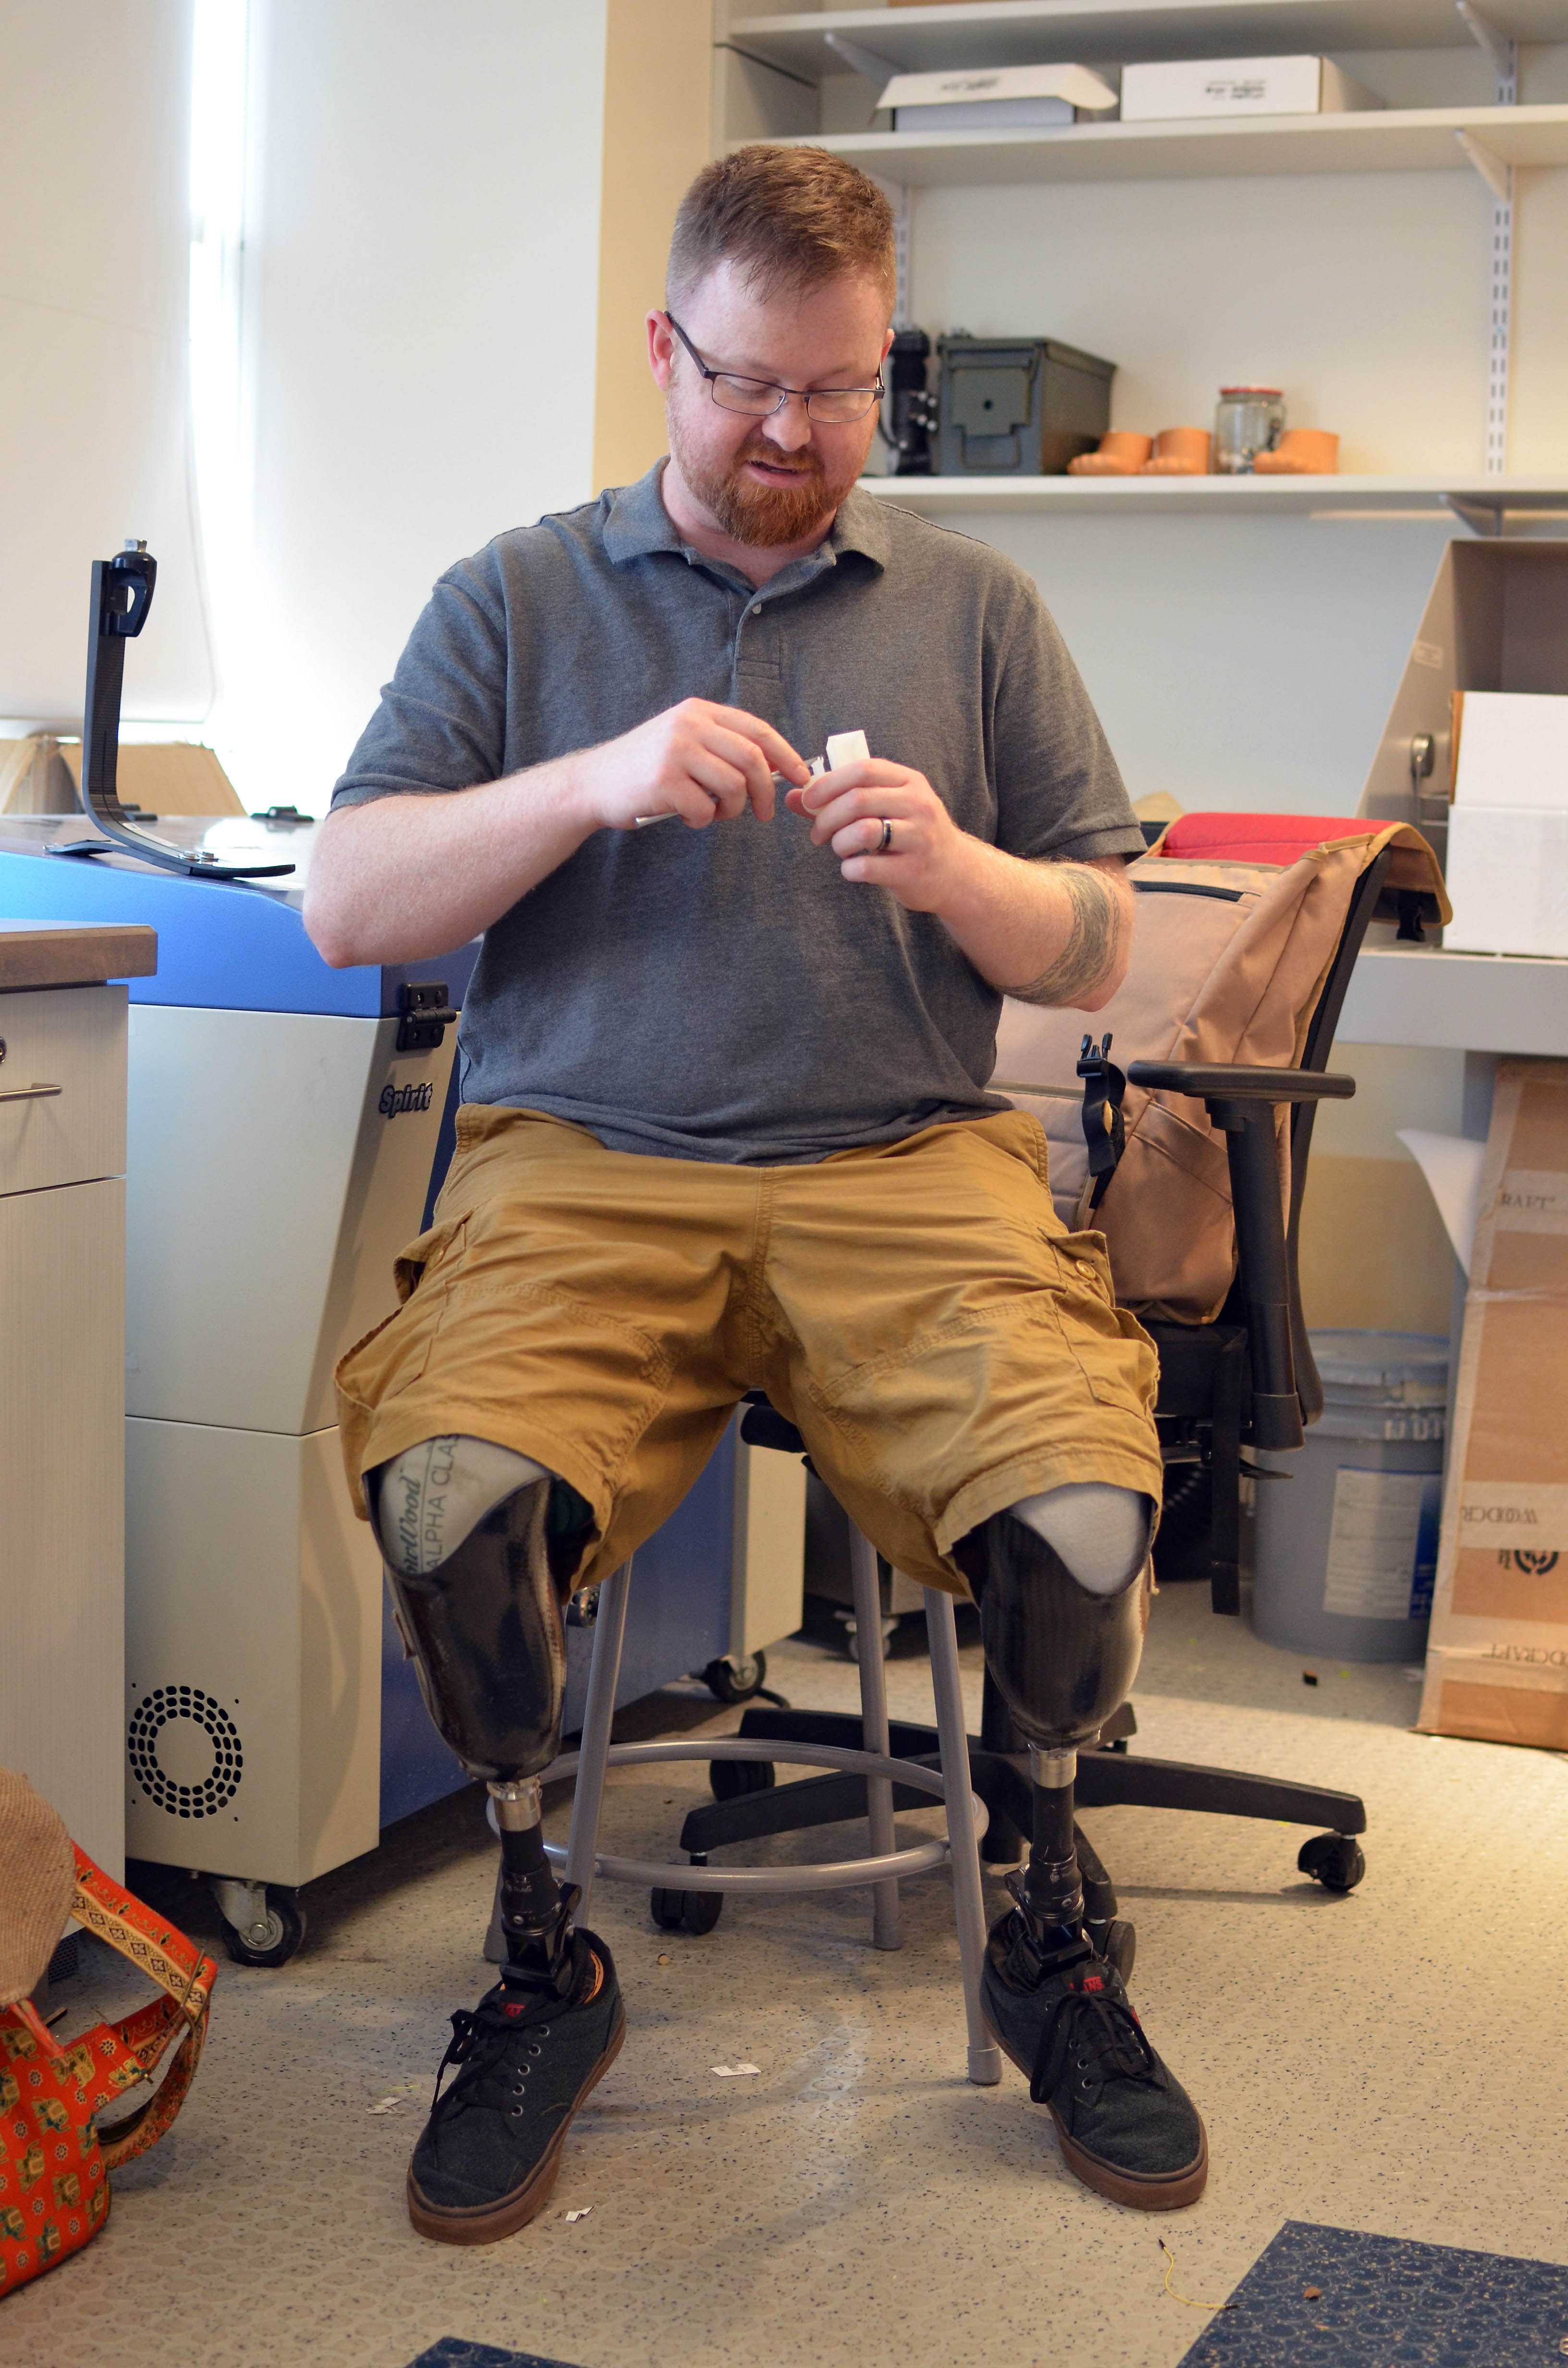 Brian Fountaine prints 3-D prosthetics